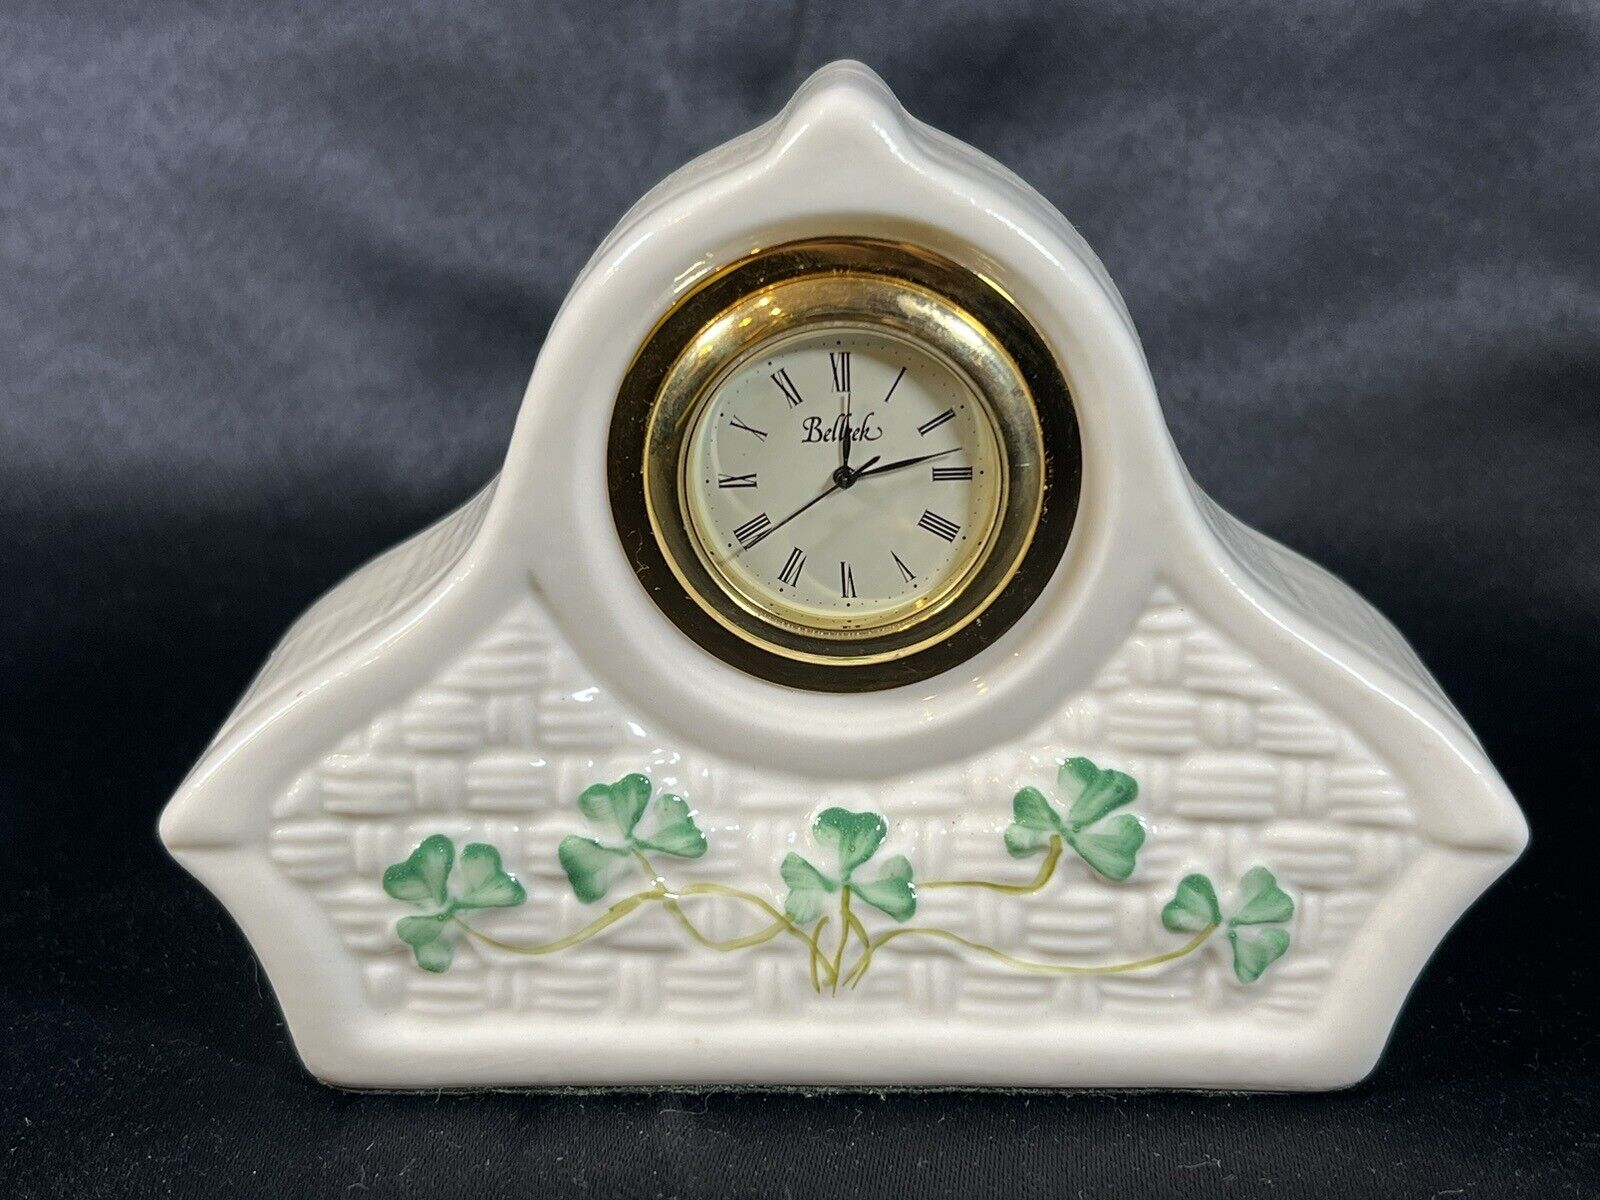 Killarney Shamrock Irish Clover Beleek porcelain Desk Clock, Needs Battery WORKS